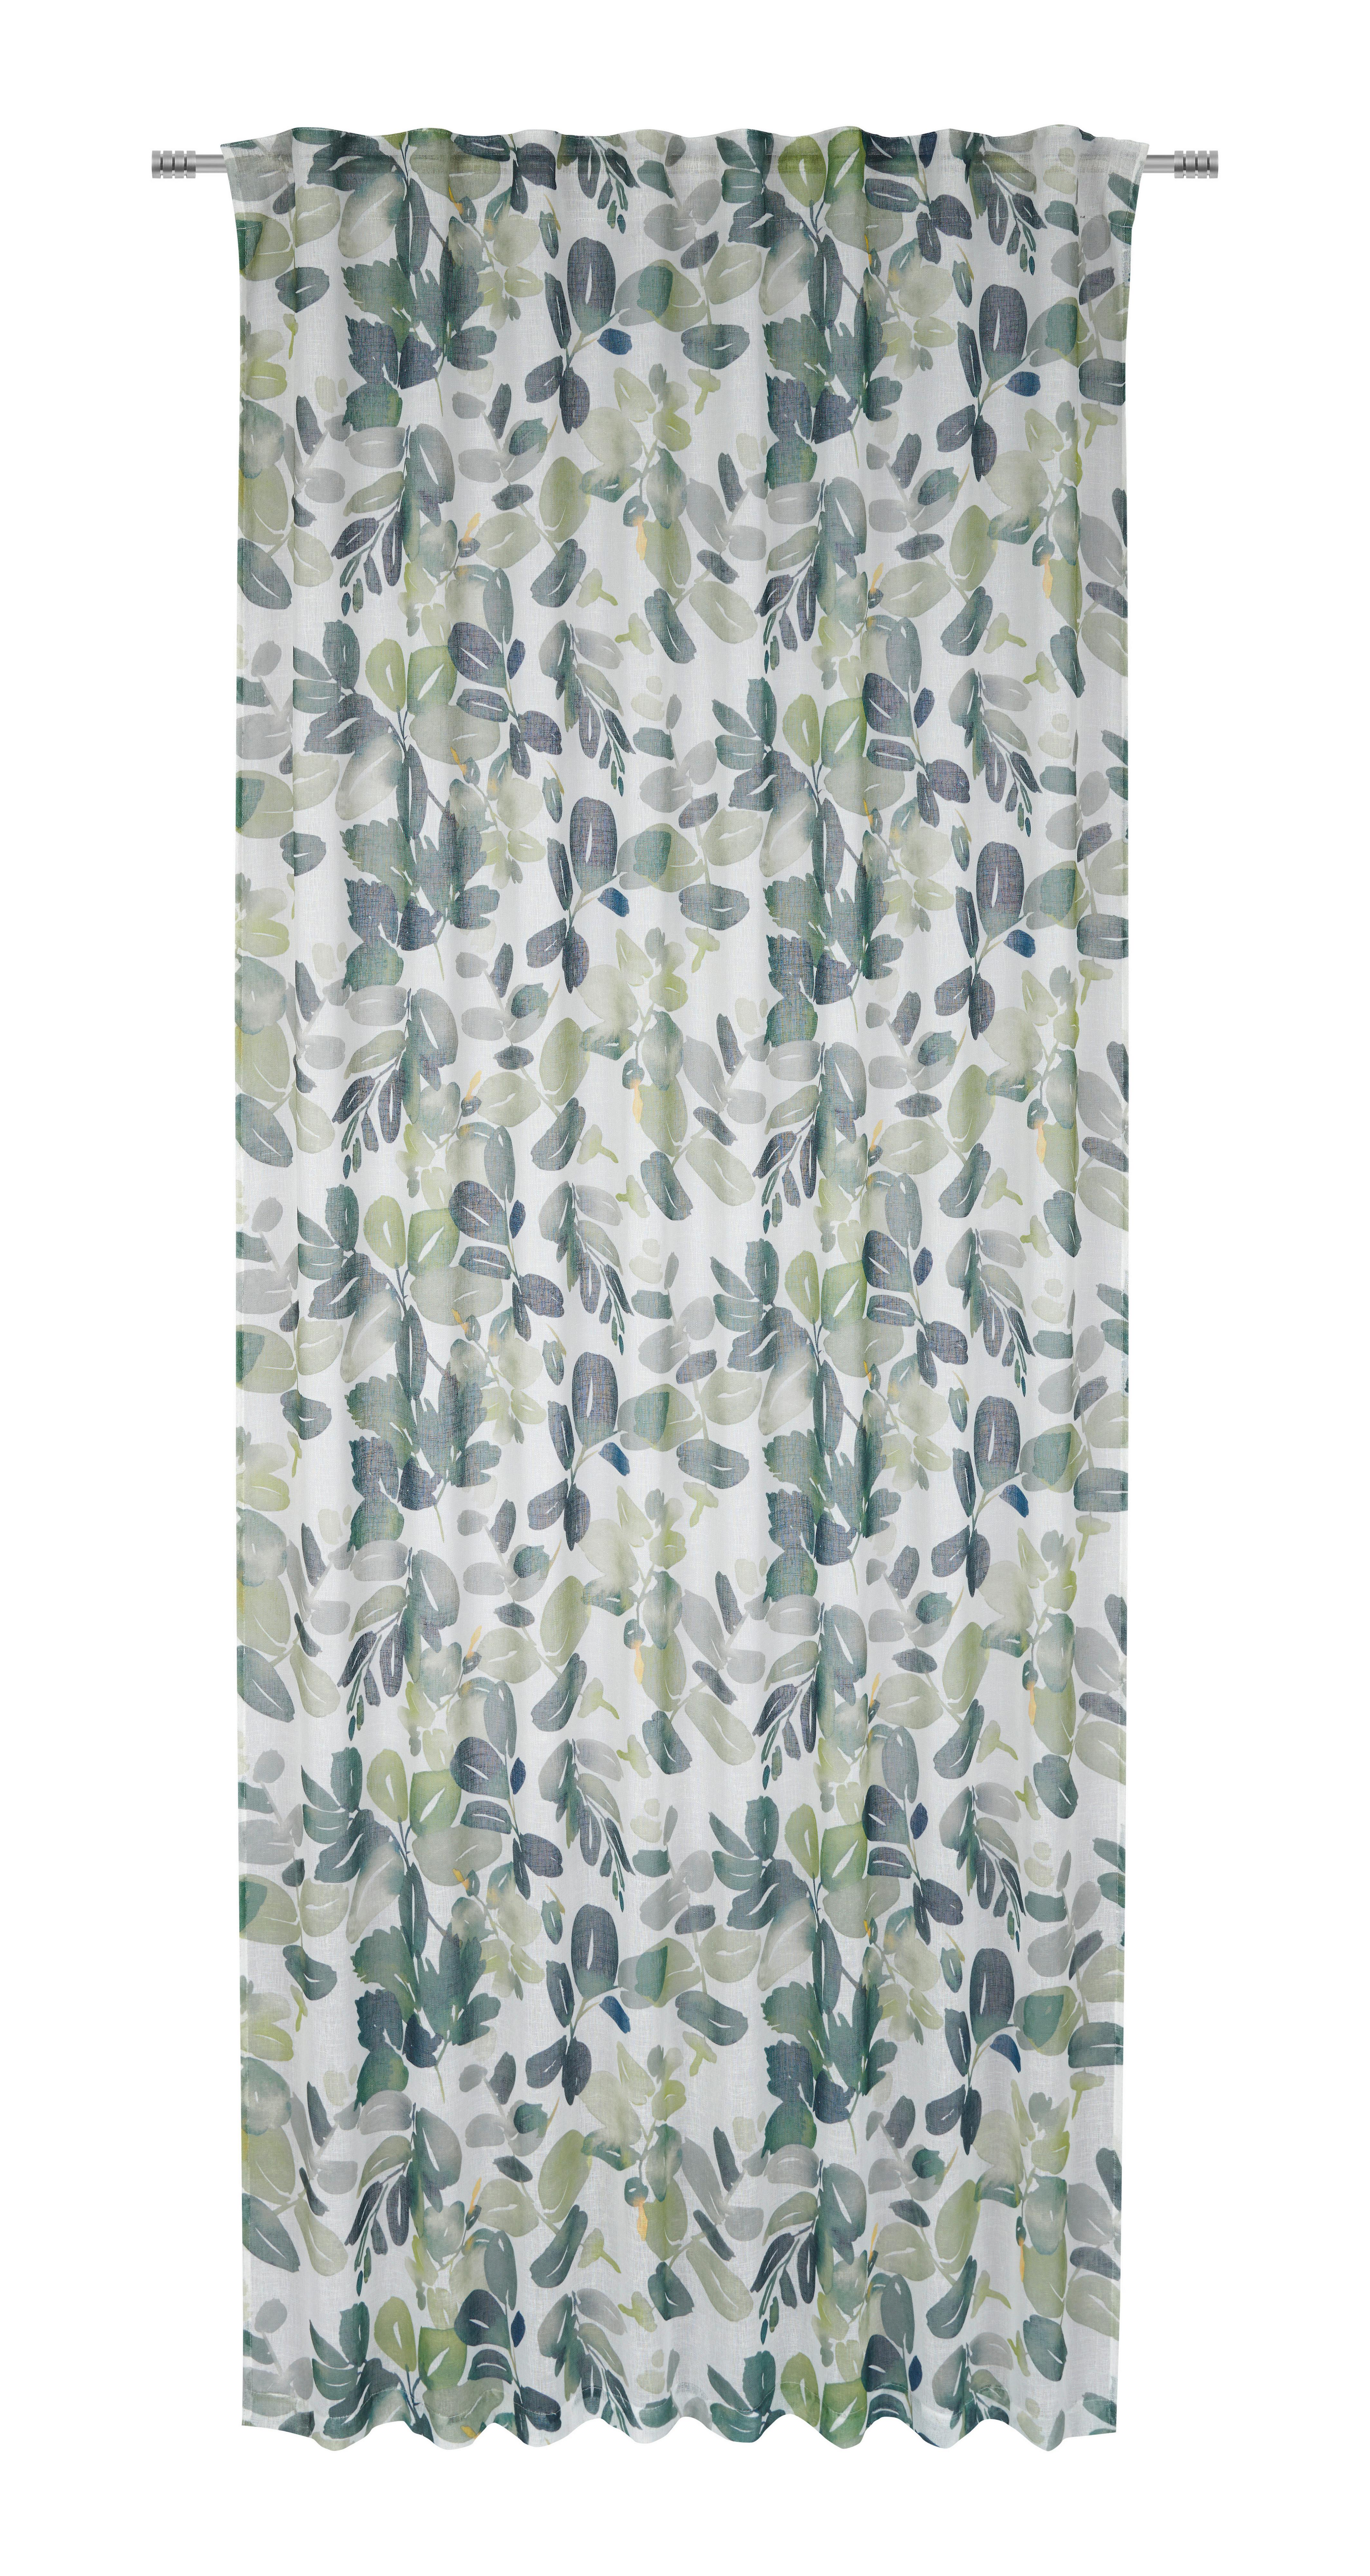 Gotova Zavjesa Steffi - zelena, Romantik / Landhaus, tekstil (135/255cm) - Modern Living